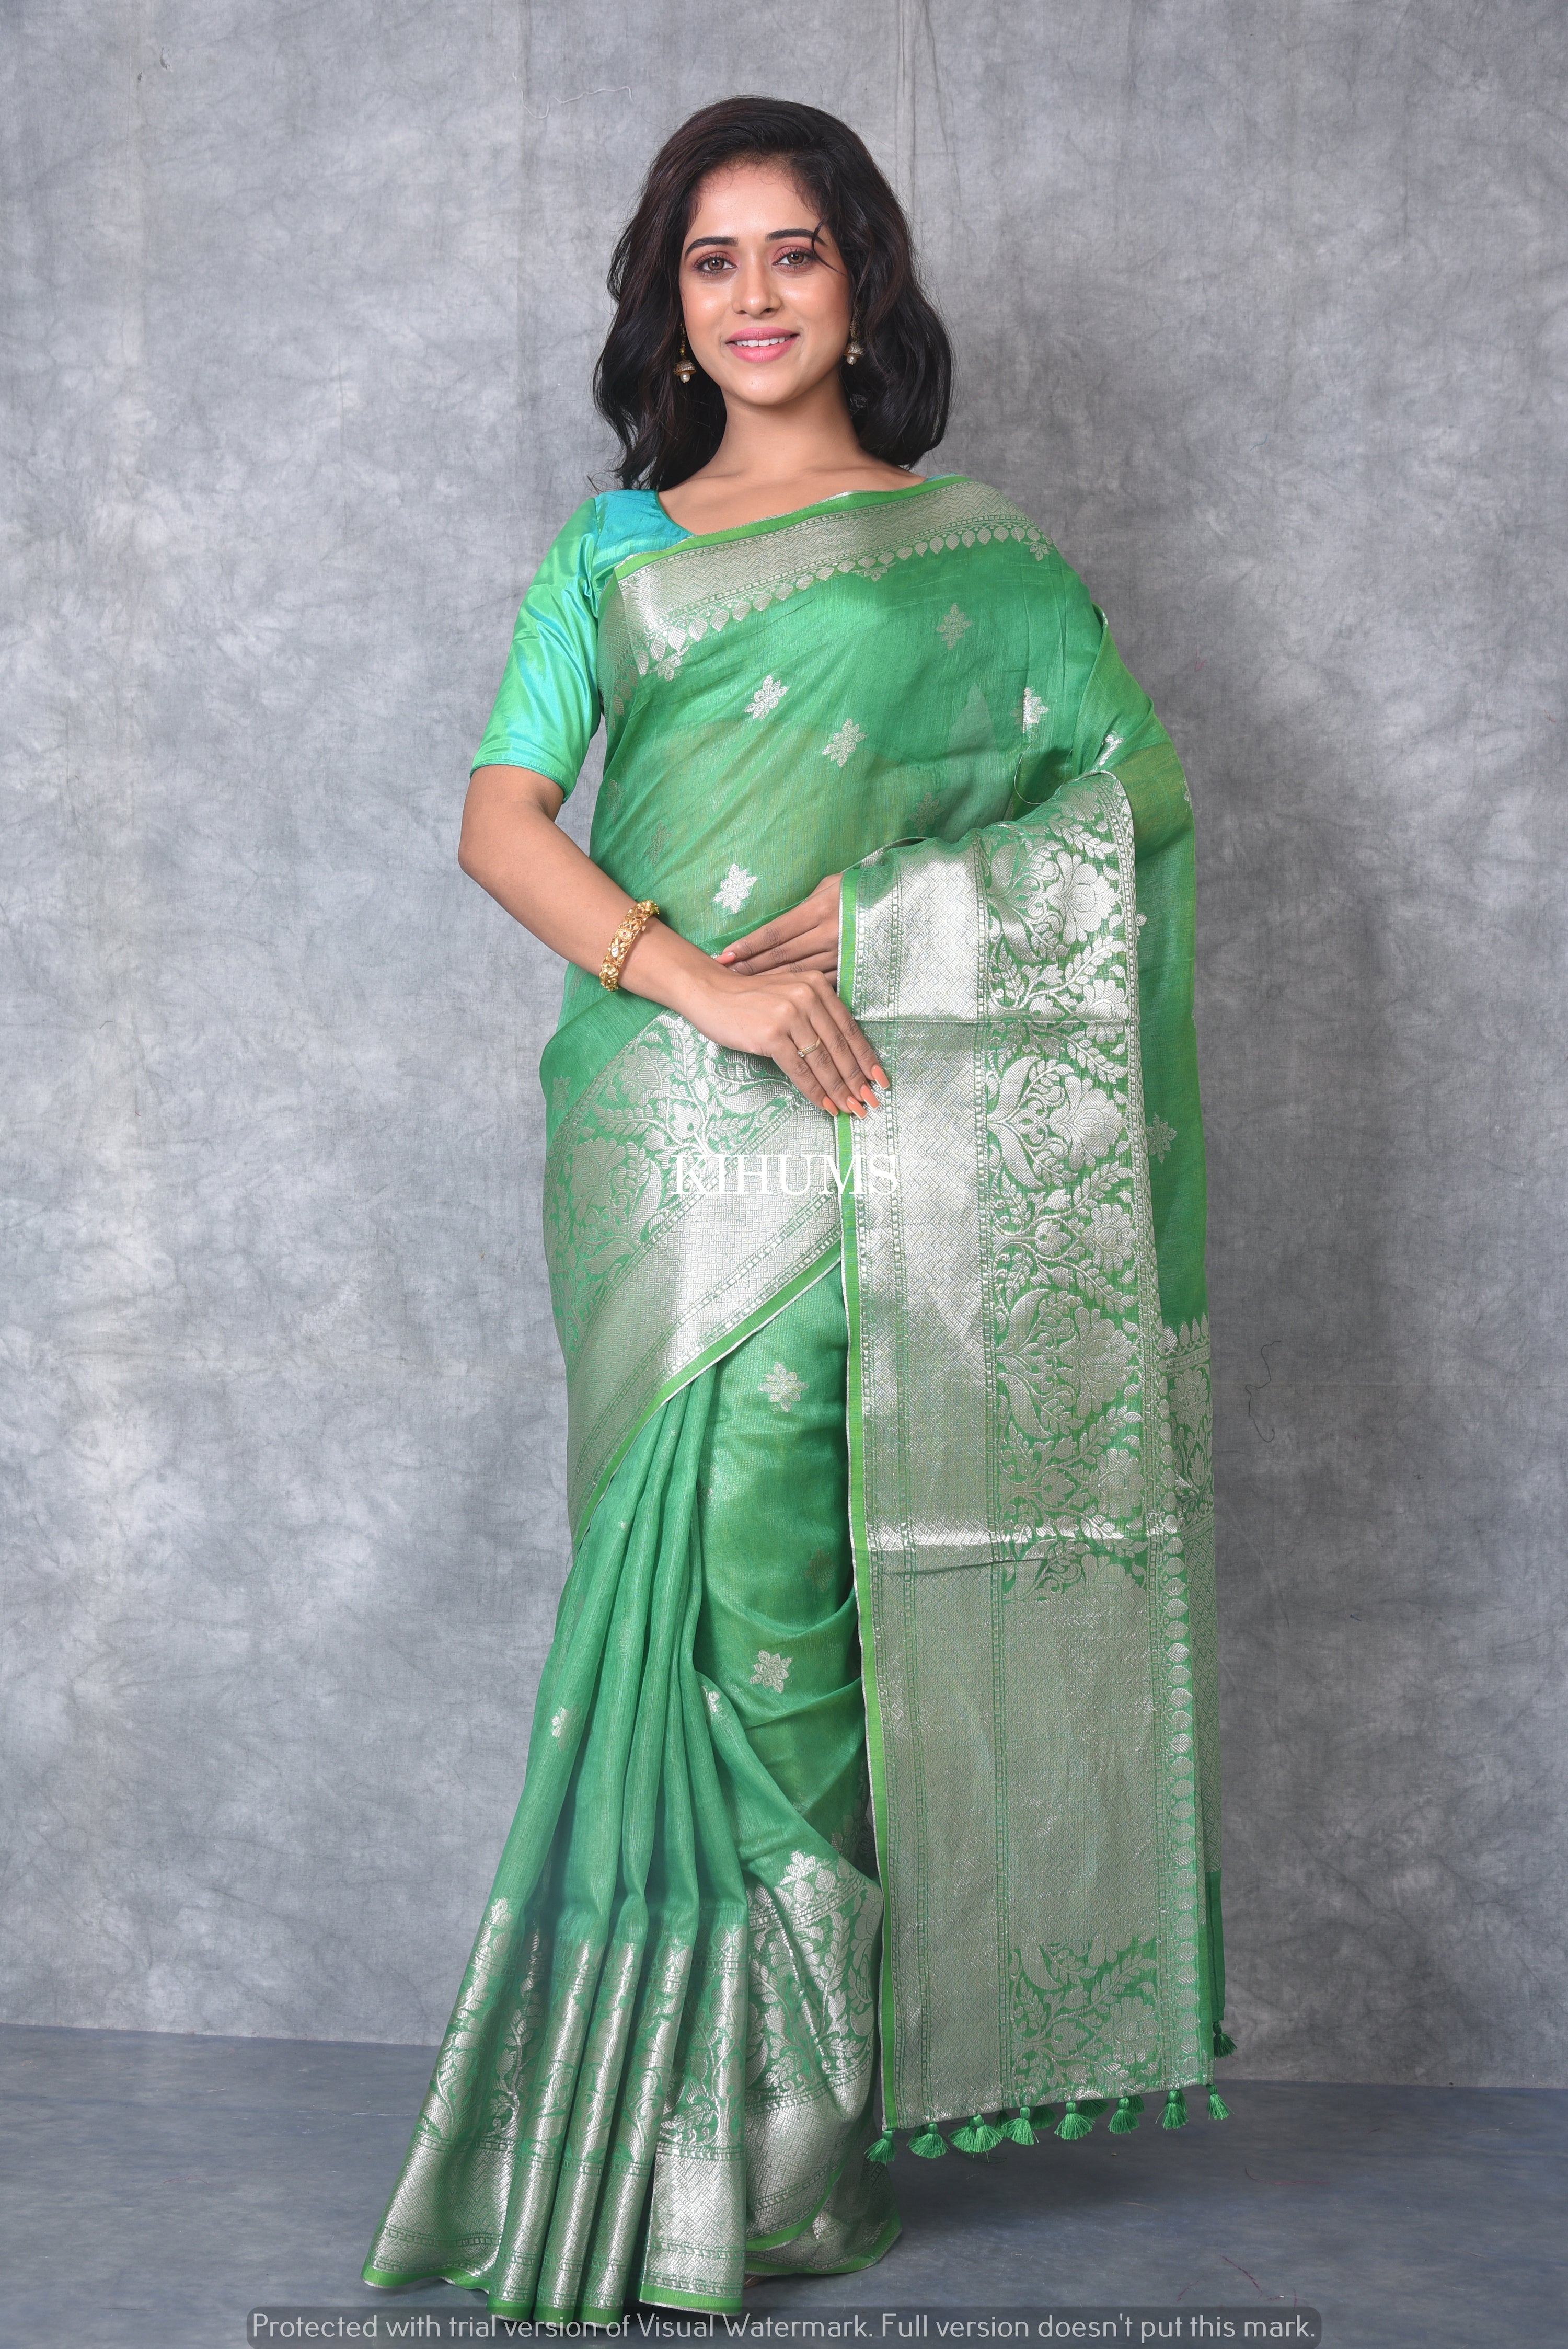 Amazing silver border silk saree designs for festive ready look - YouTube